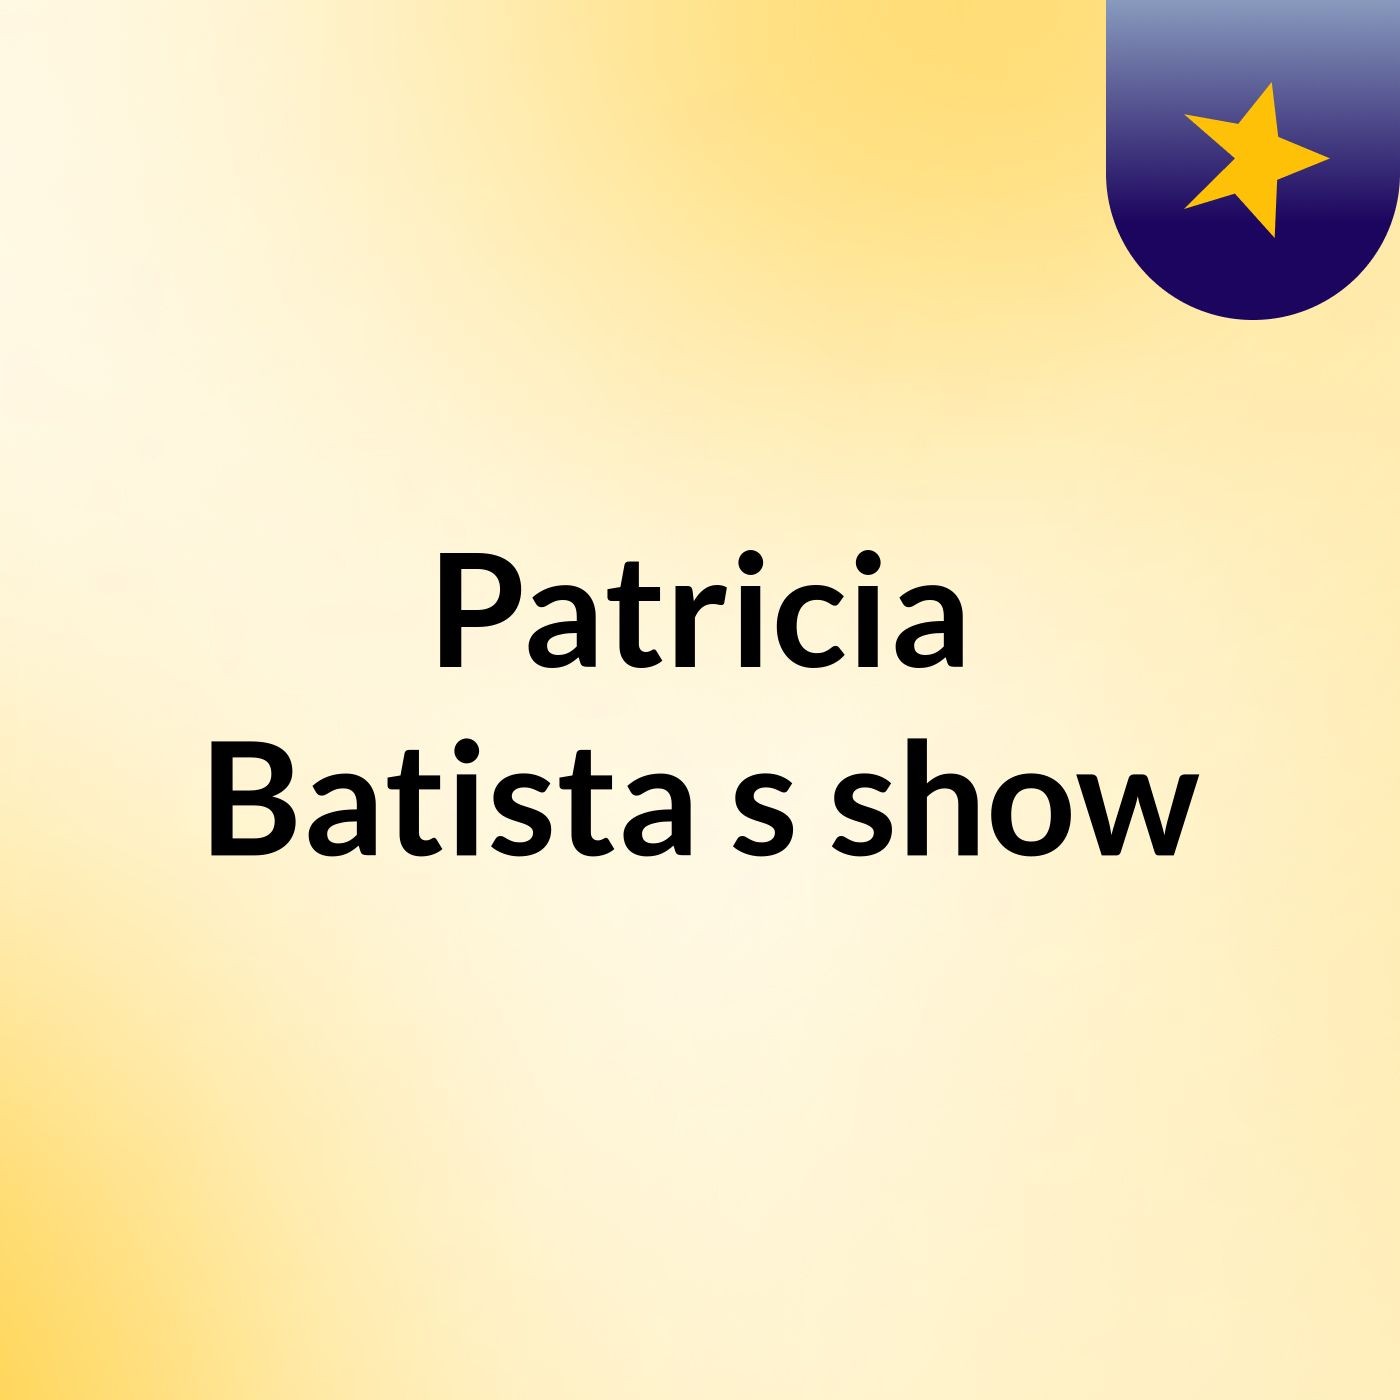 Patricia Batista's show